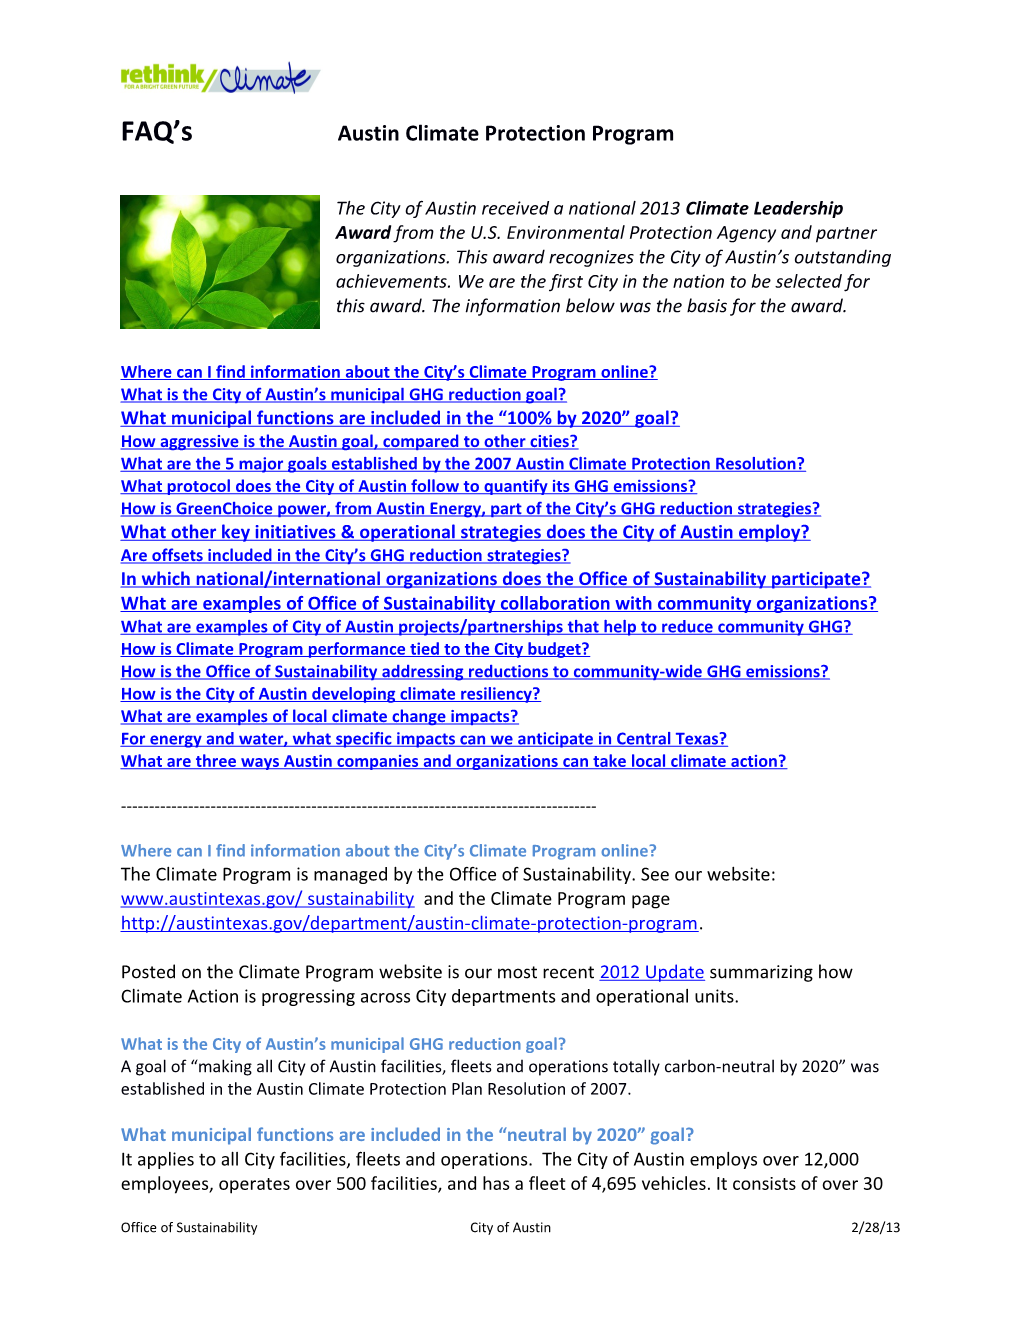 FAQ S Austin Climate Protection Program